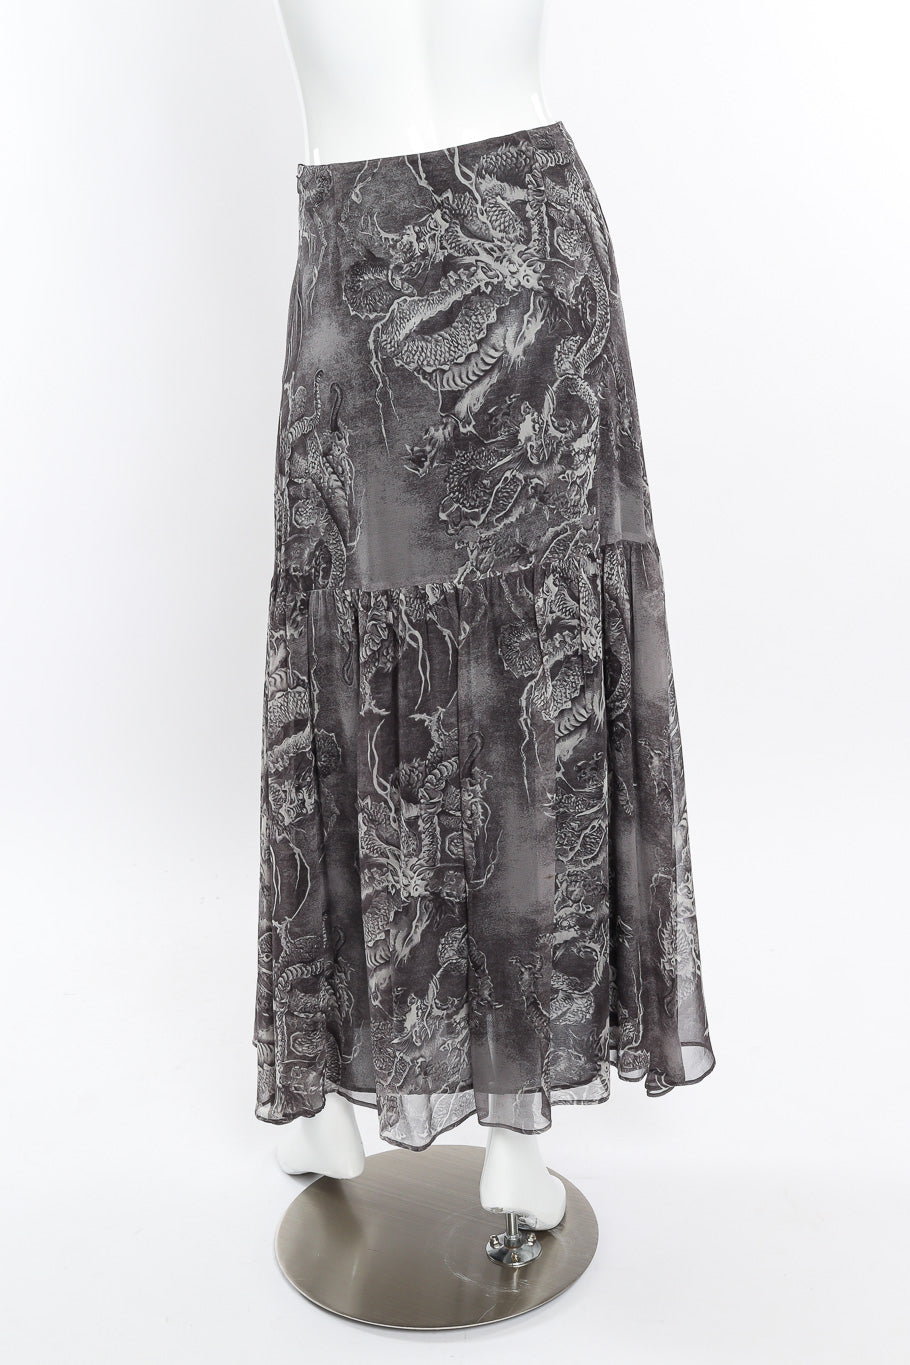 Kenzo Dragon Print Silk Skirt back view on mannequin @Recessla